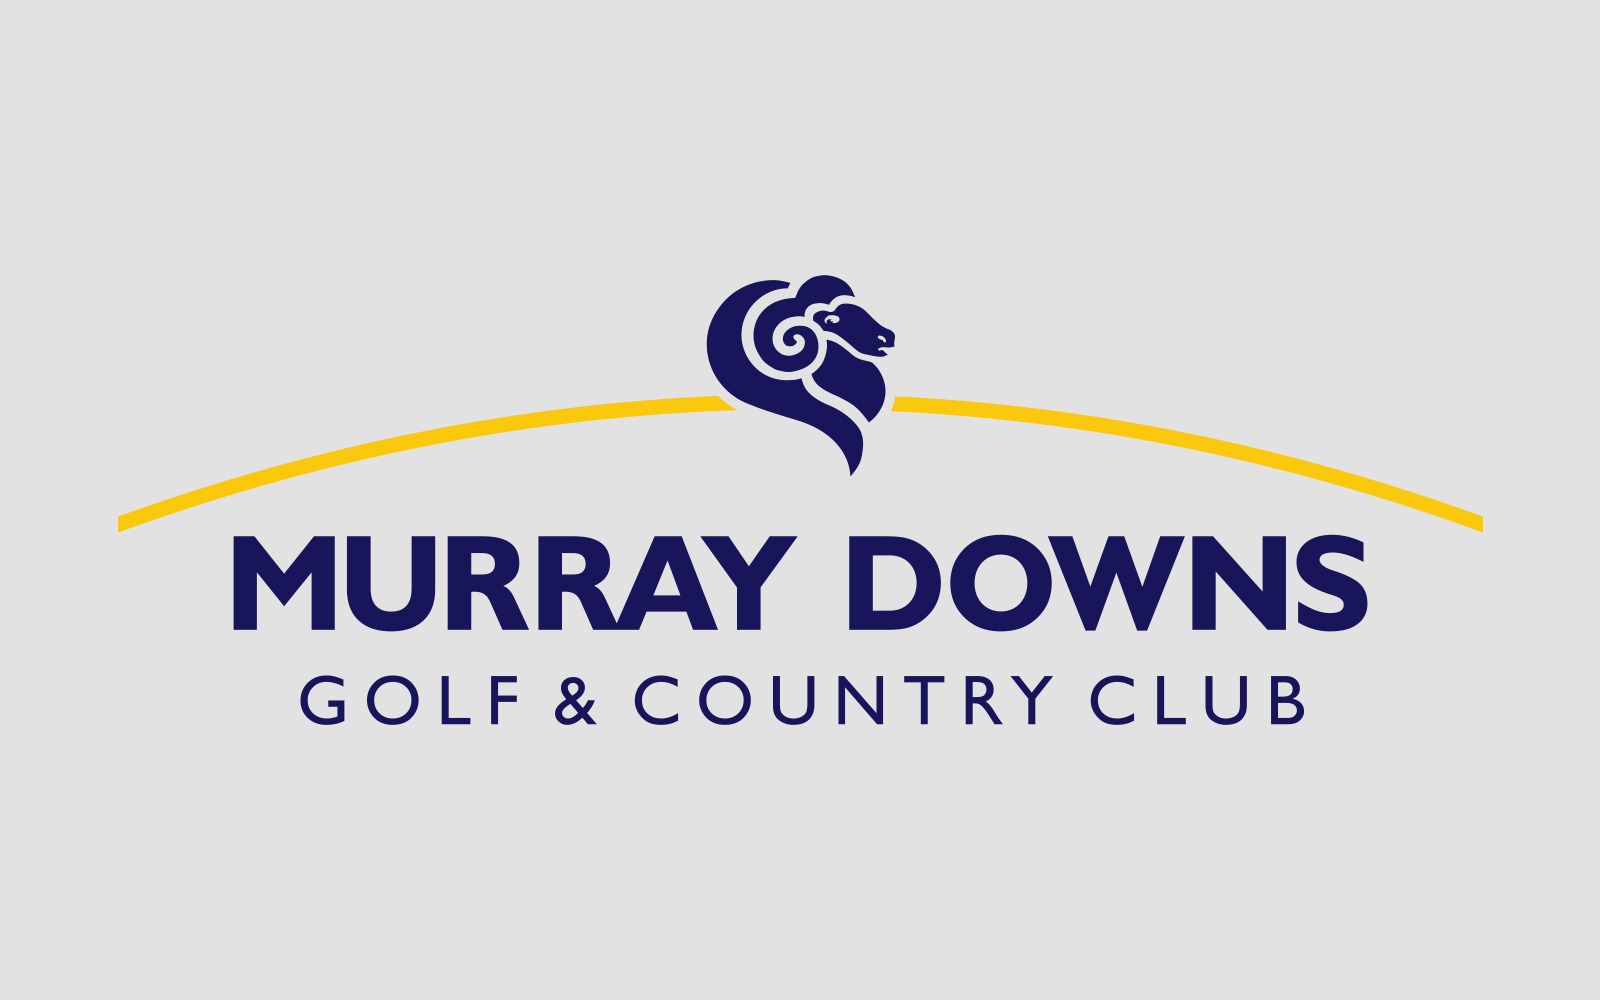 Murray Downs Golf & Country Club